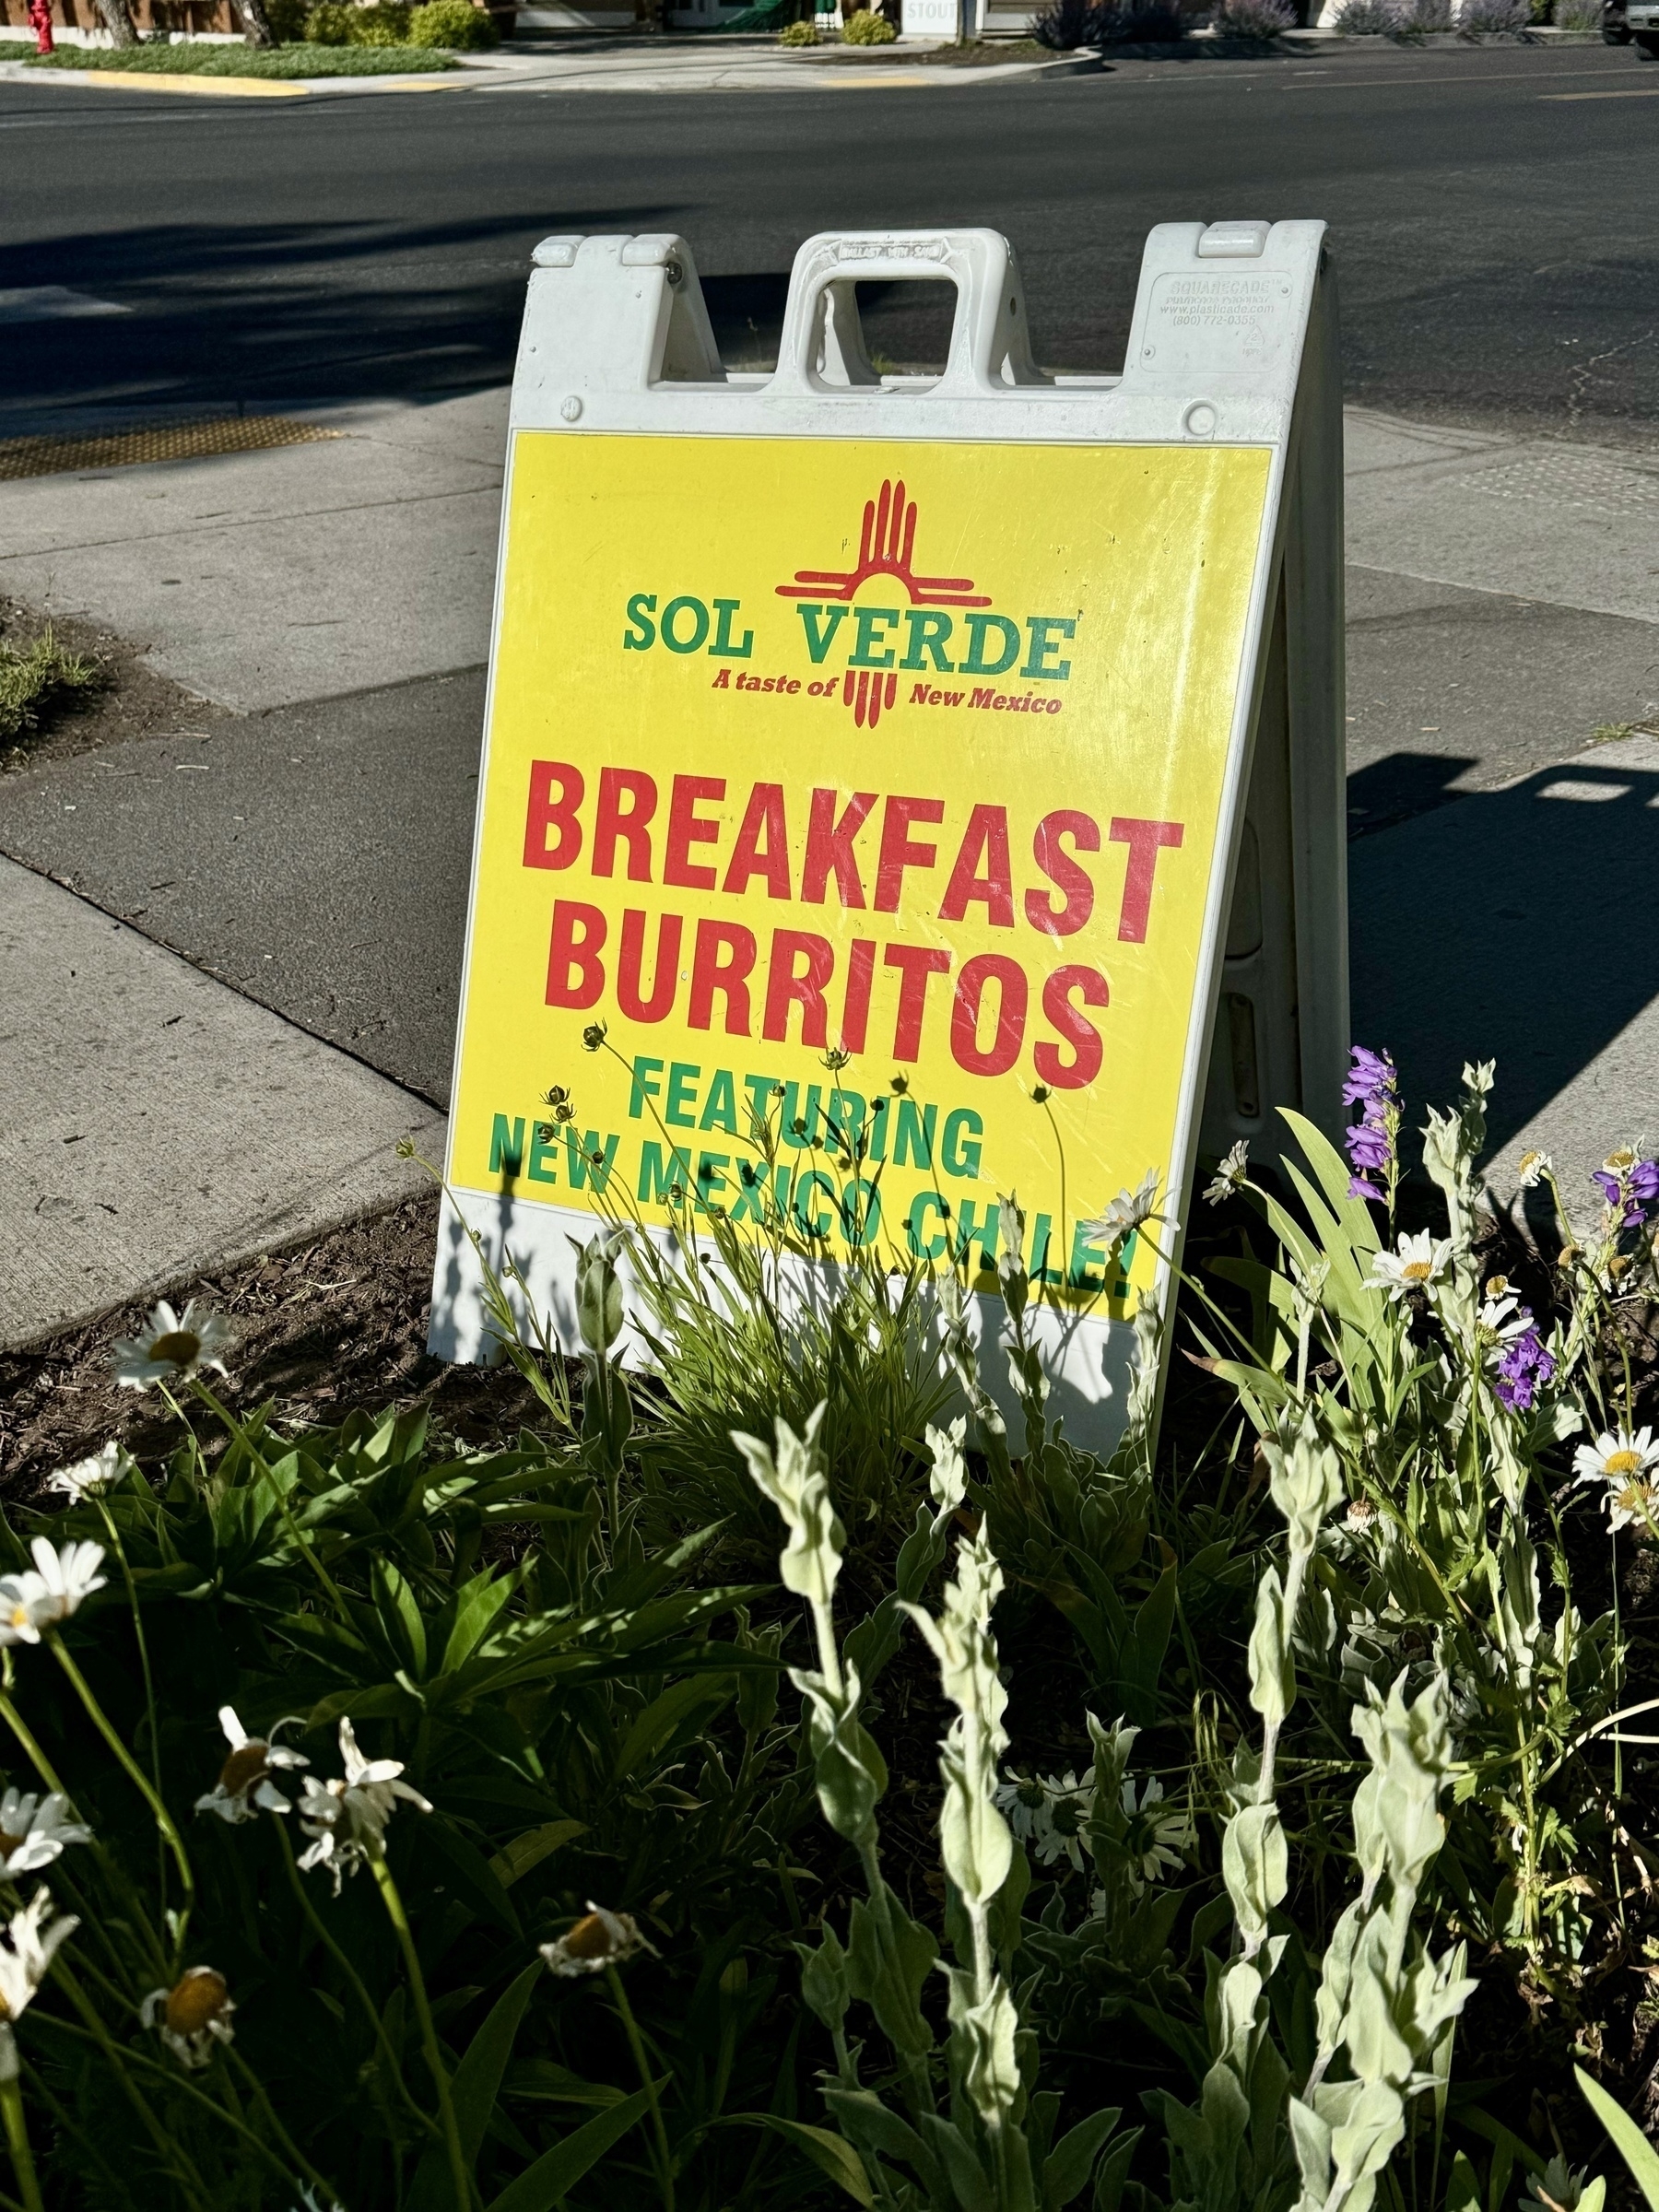 Sign for Sol Verde breakfast burritos.